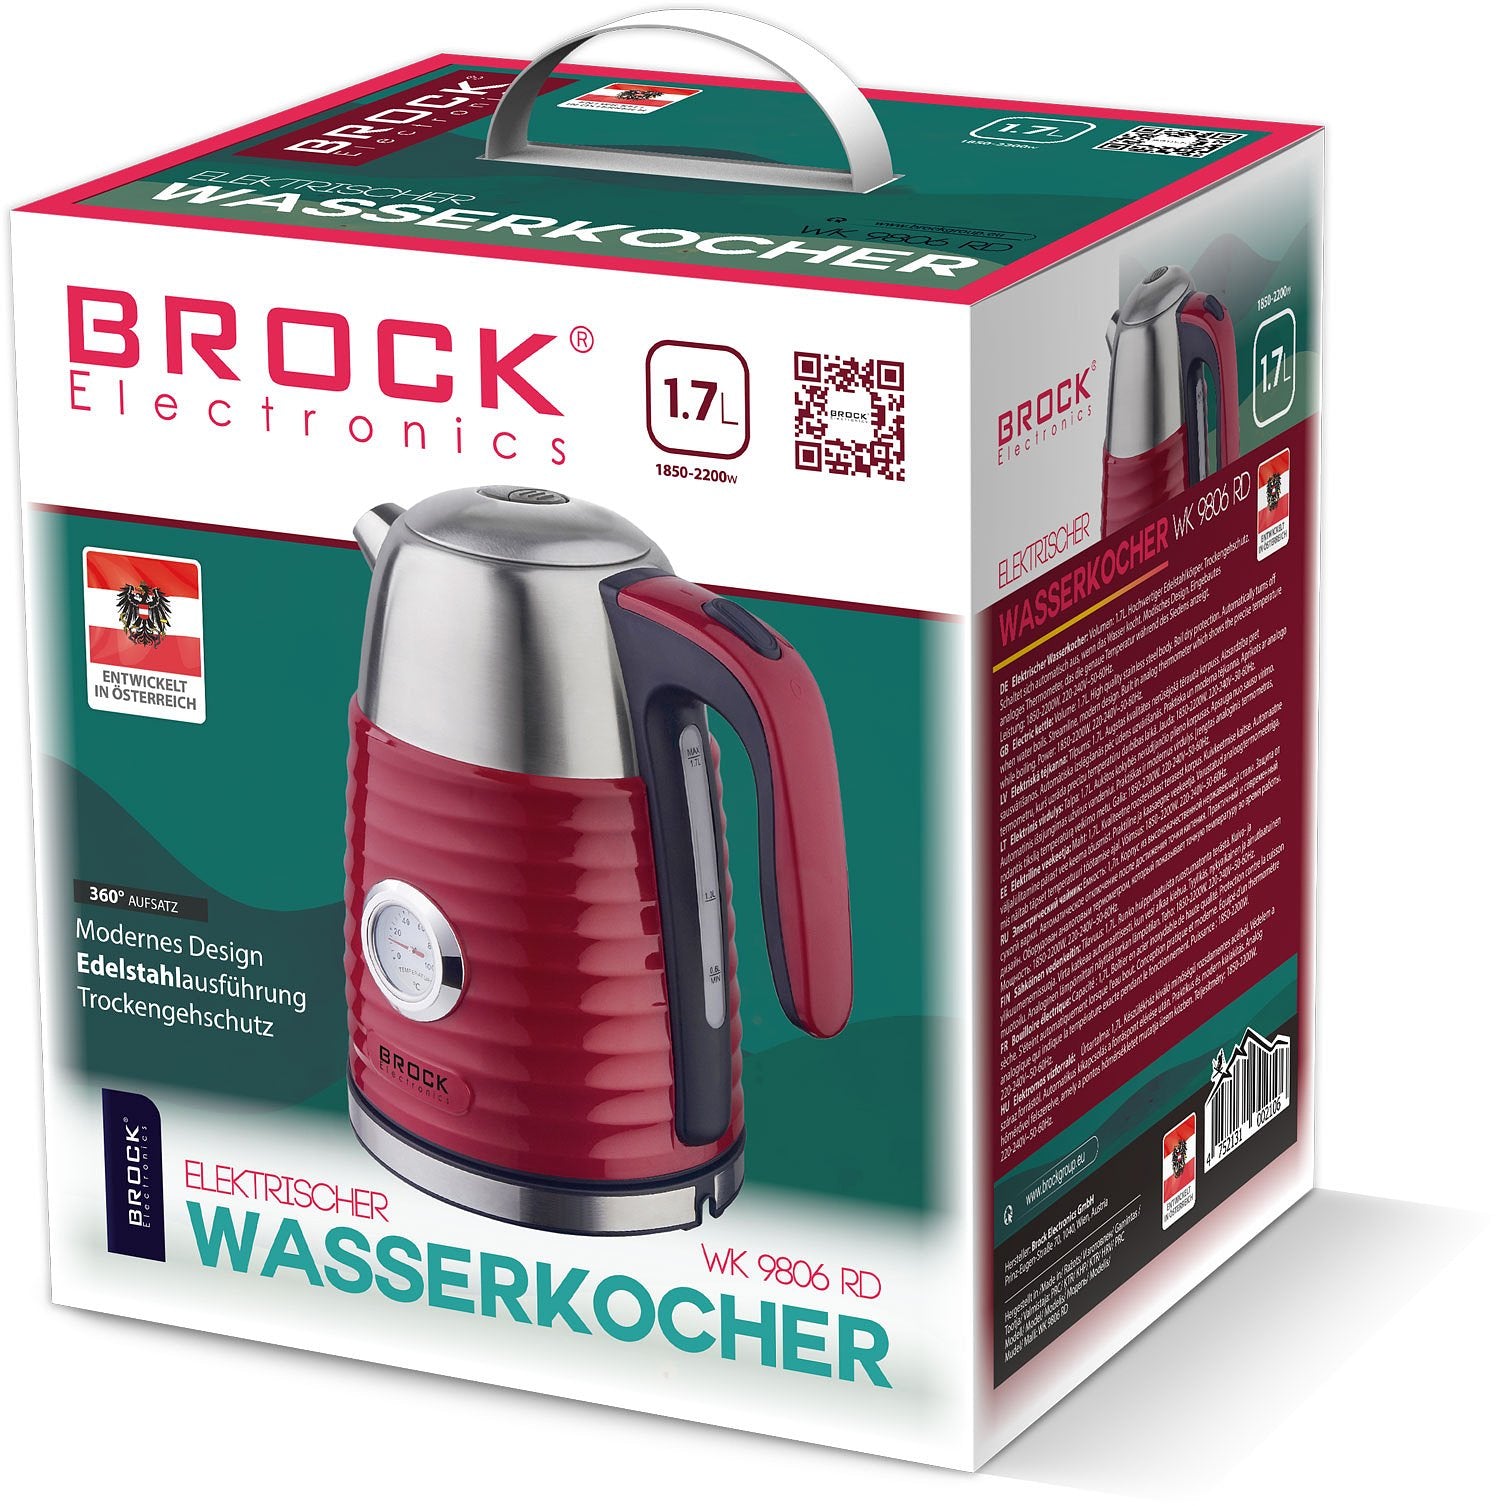 BROCK Electronics Waterkoker WK 9806 RD (Donkerrood, Thermometer, 1.7 liter)